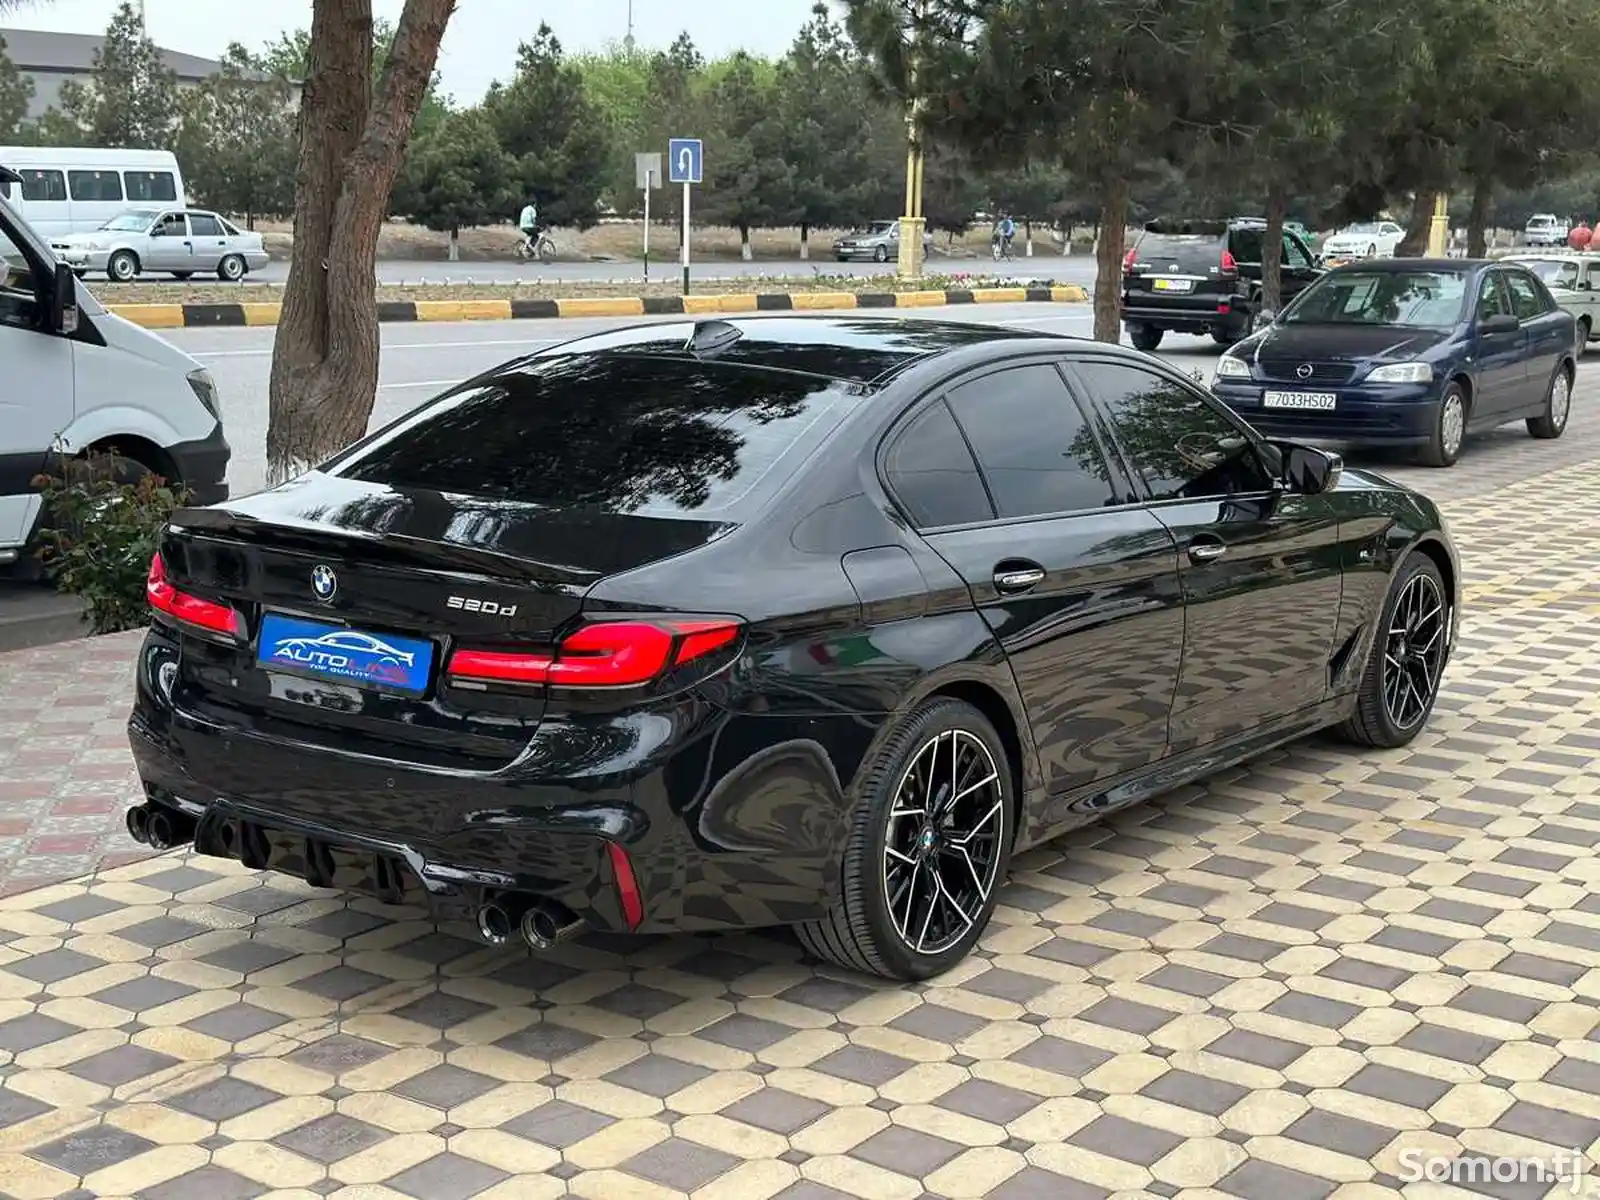 BMW 5 series, 2017-11